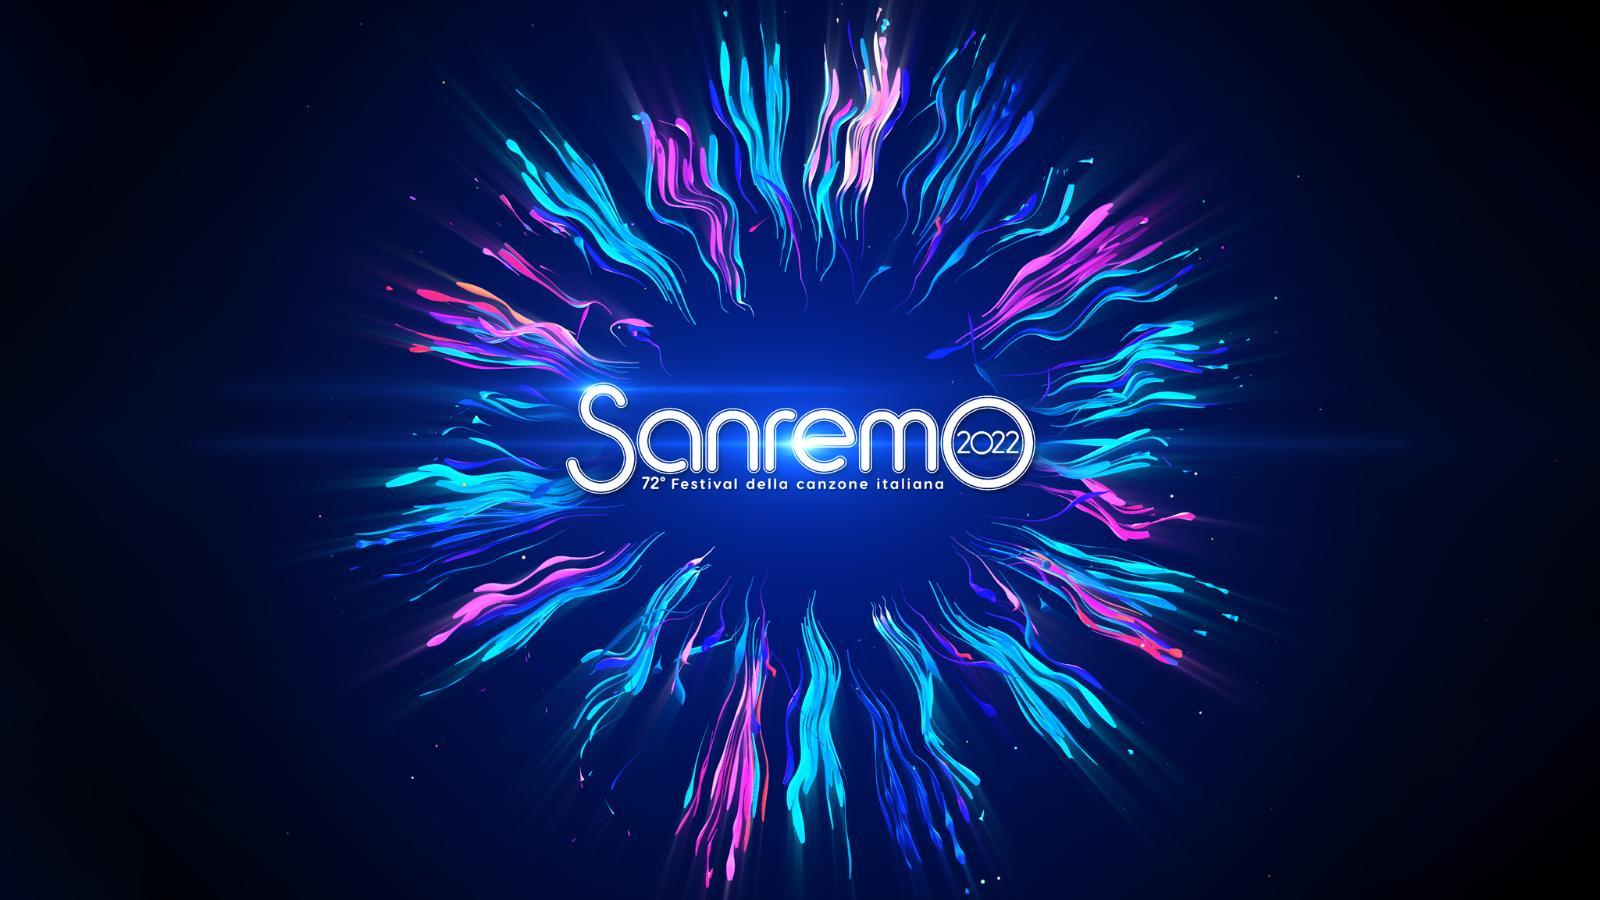 Pagelle Sanremo 2022 Jacopo Tomatis